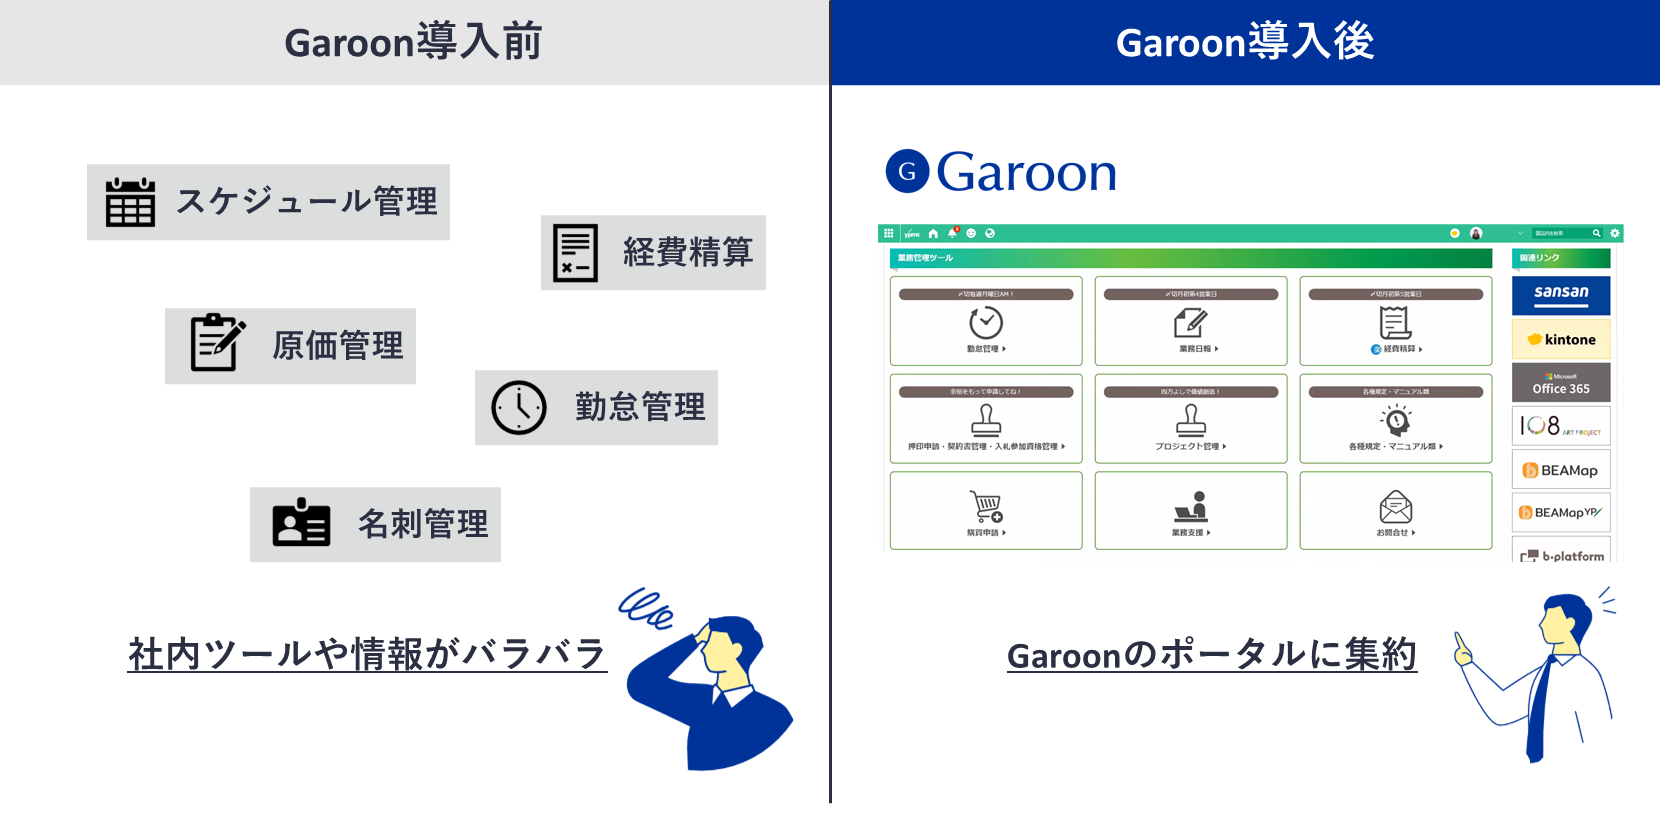 Garoon導入後、社内ツールや情報がGaroonのポータルに集約された